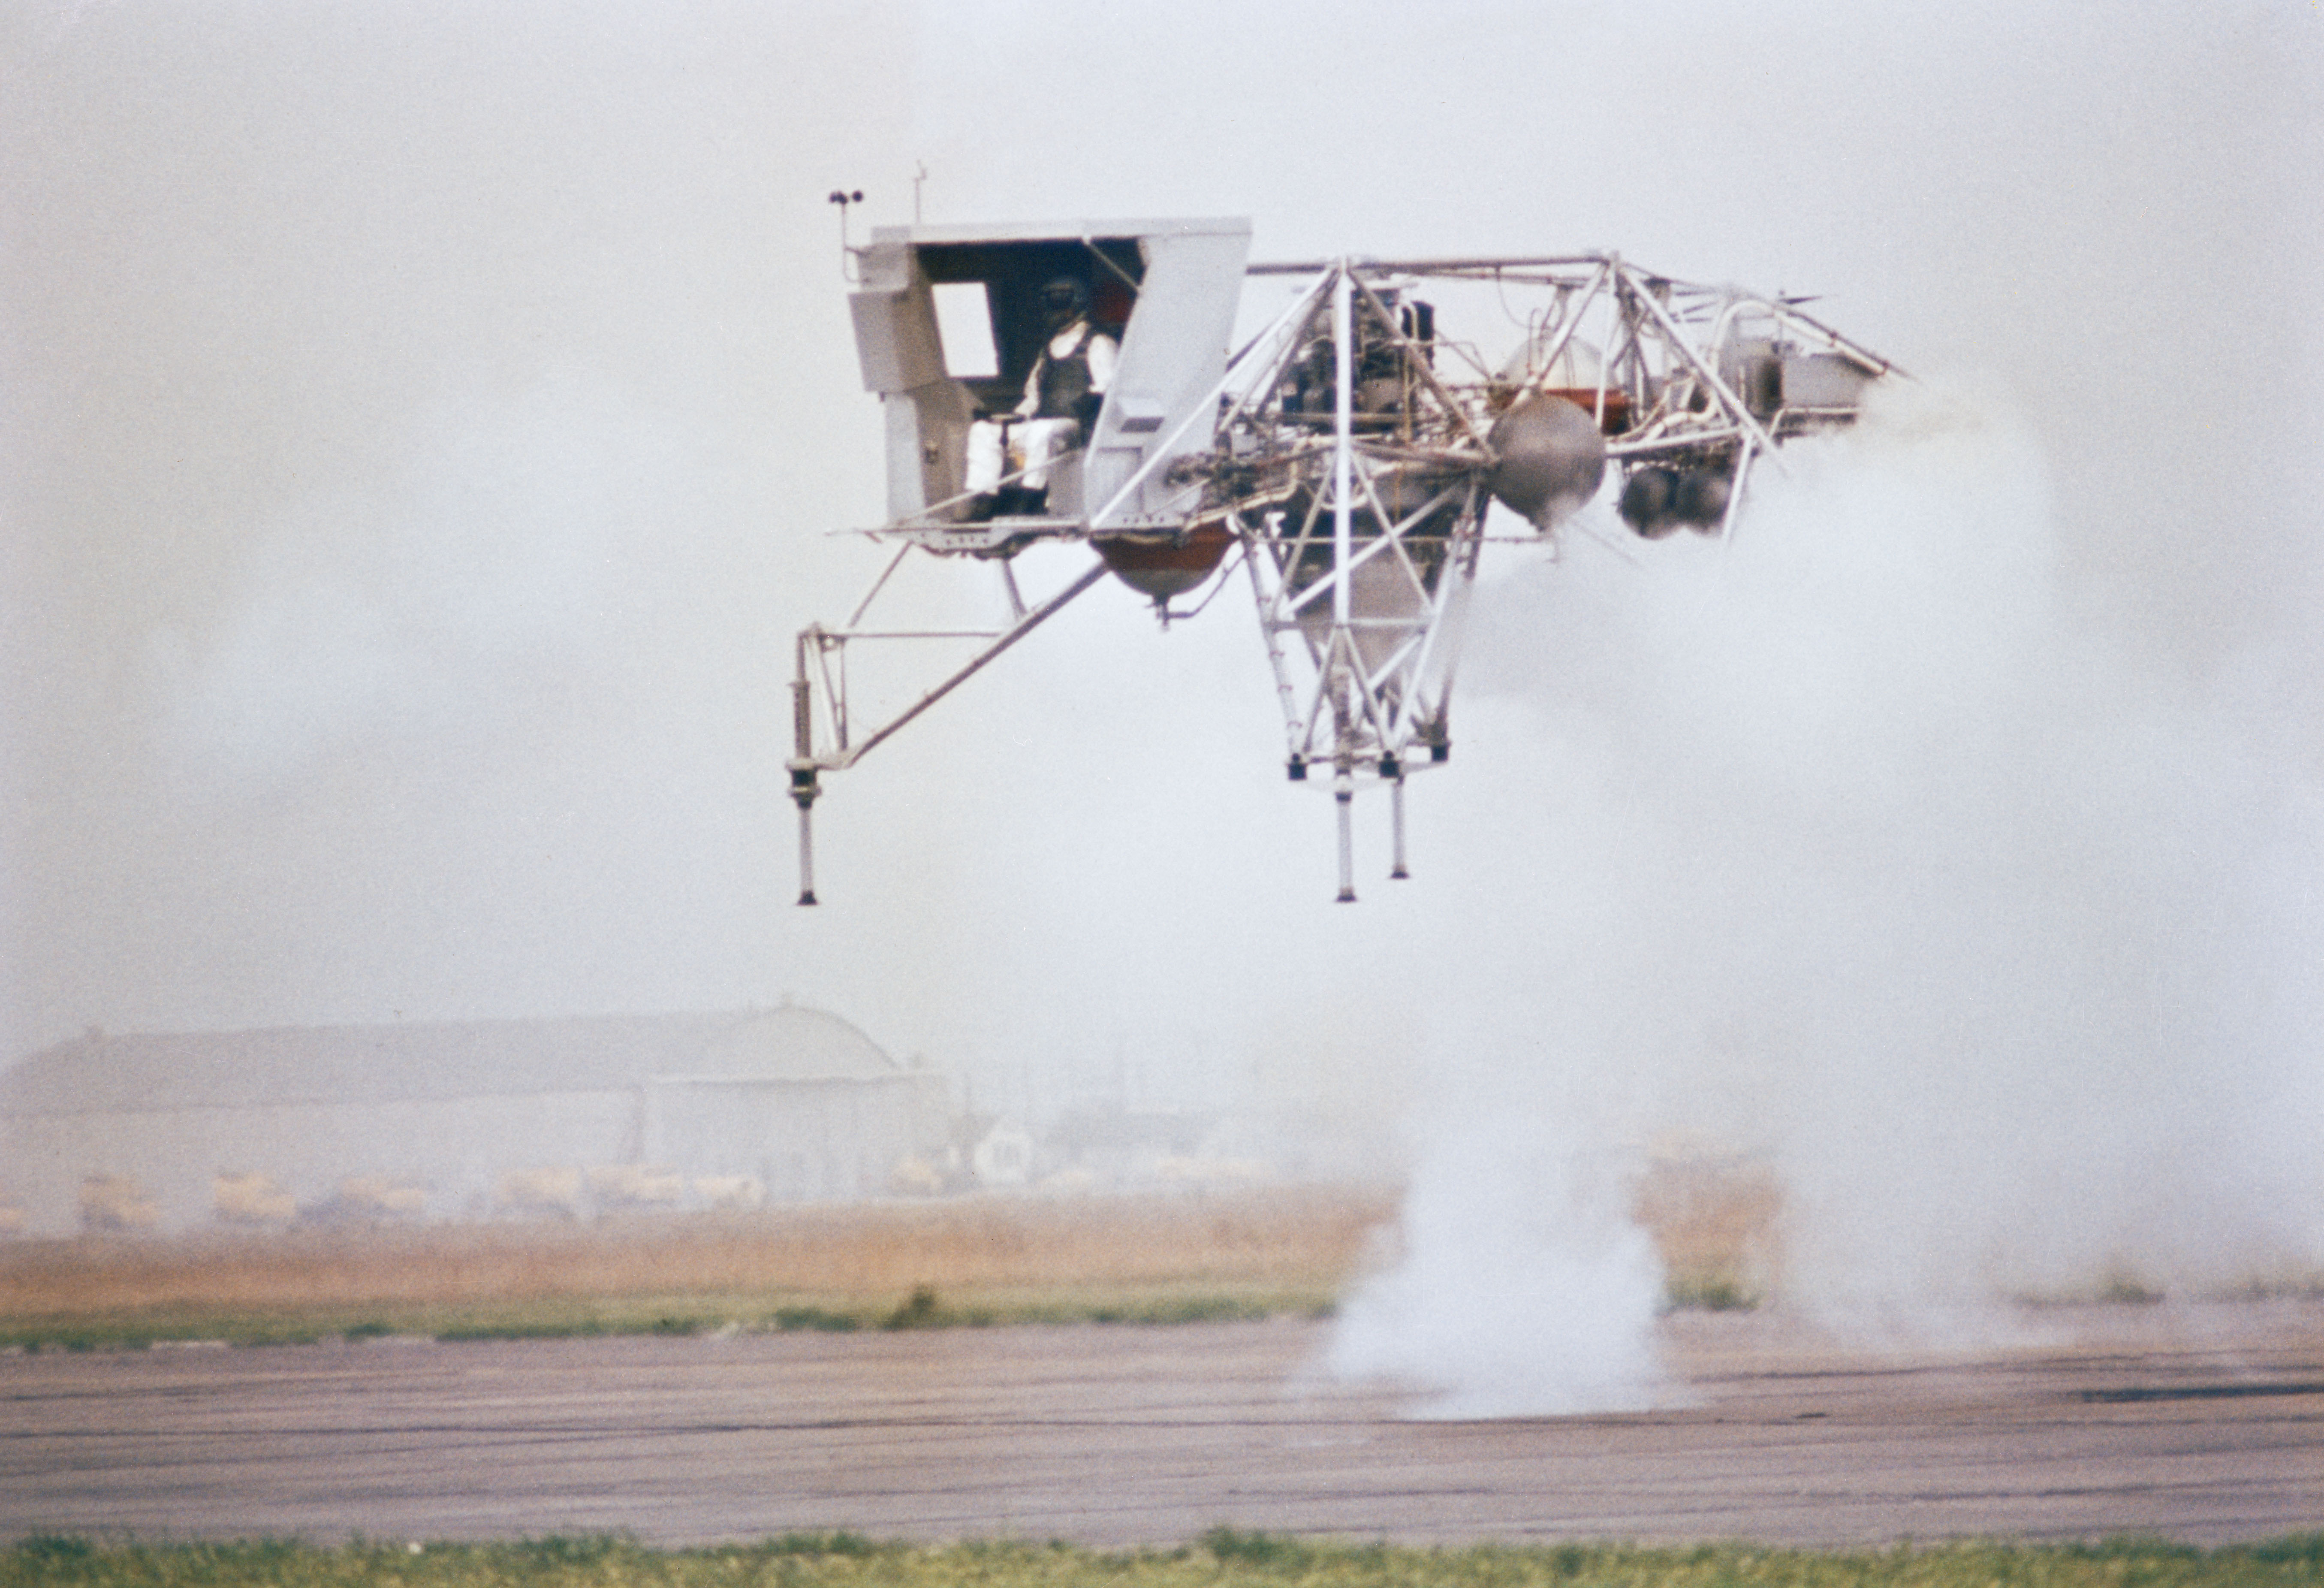 At Ellington Air Force Base in Houston, NASA pilot Harold E. “Bud” Ream at the controls of Lunar Landing Training Vehicle-2 (LLTV-2) on its first flight after flights resumed